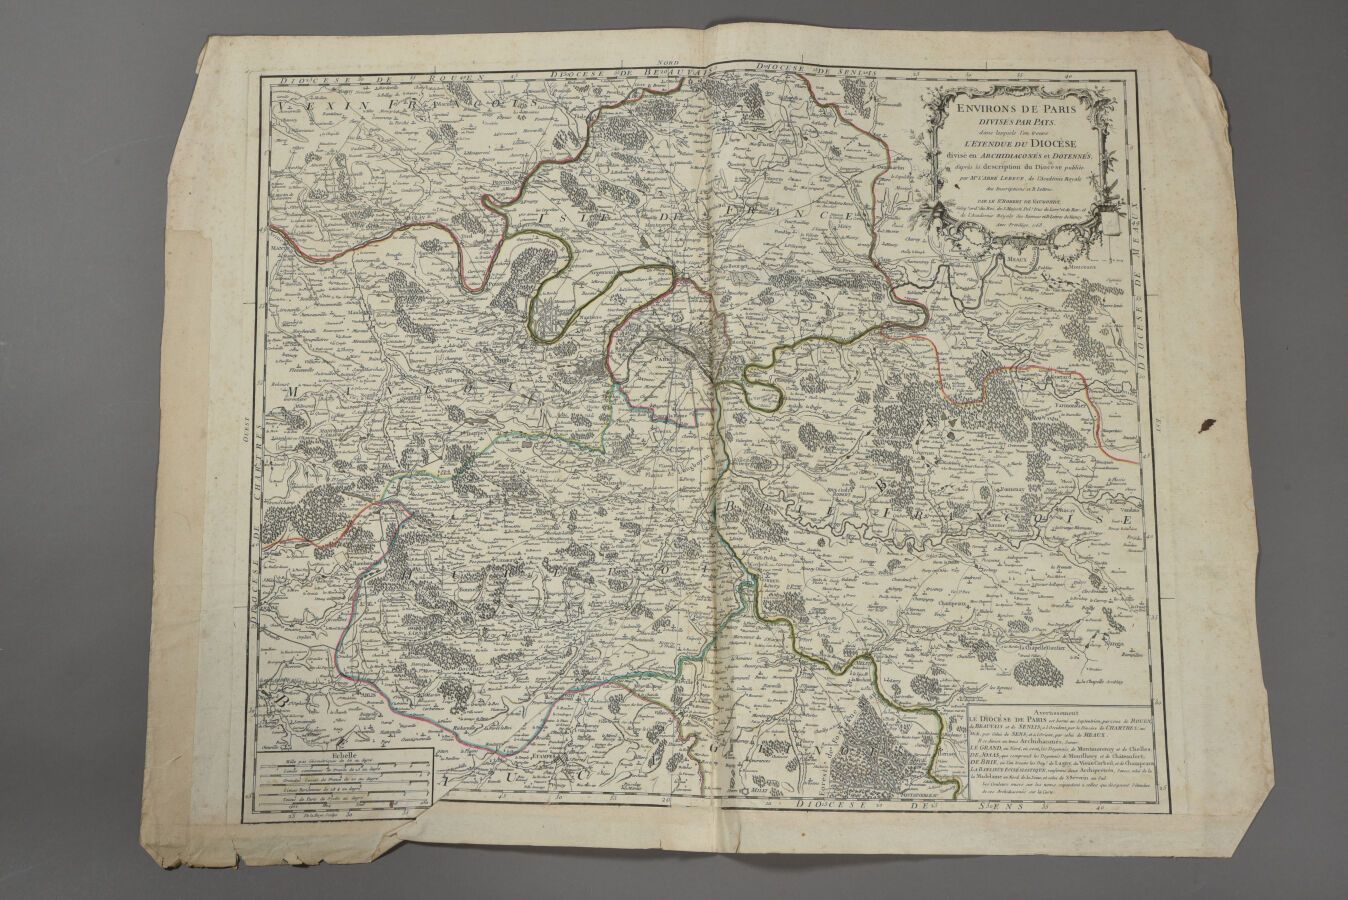 Null 罗伯特-德-沃贡迪
(法国，18世纪)
巴黎周边的地图。1768. 
双对开。 
意外事件(发霉，褶皱等)。